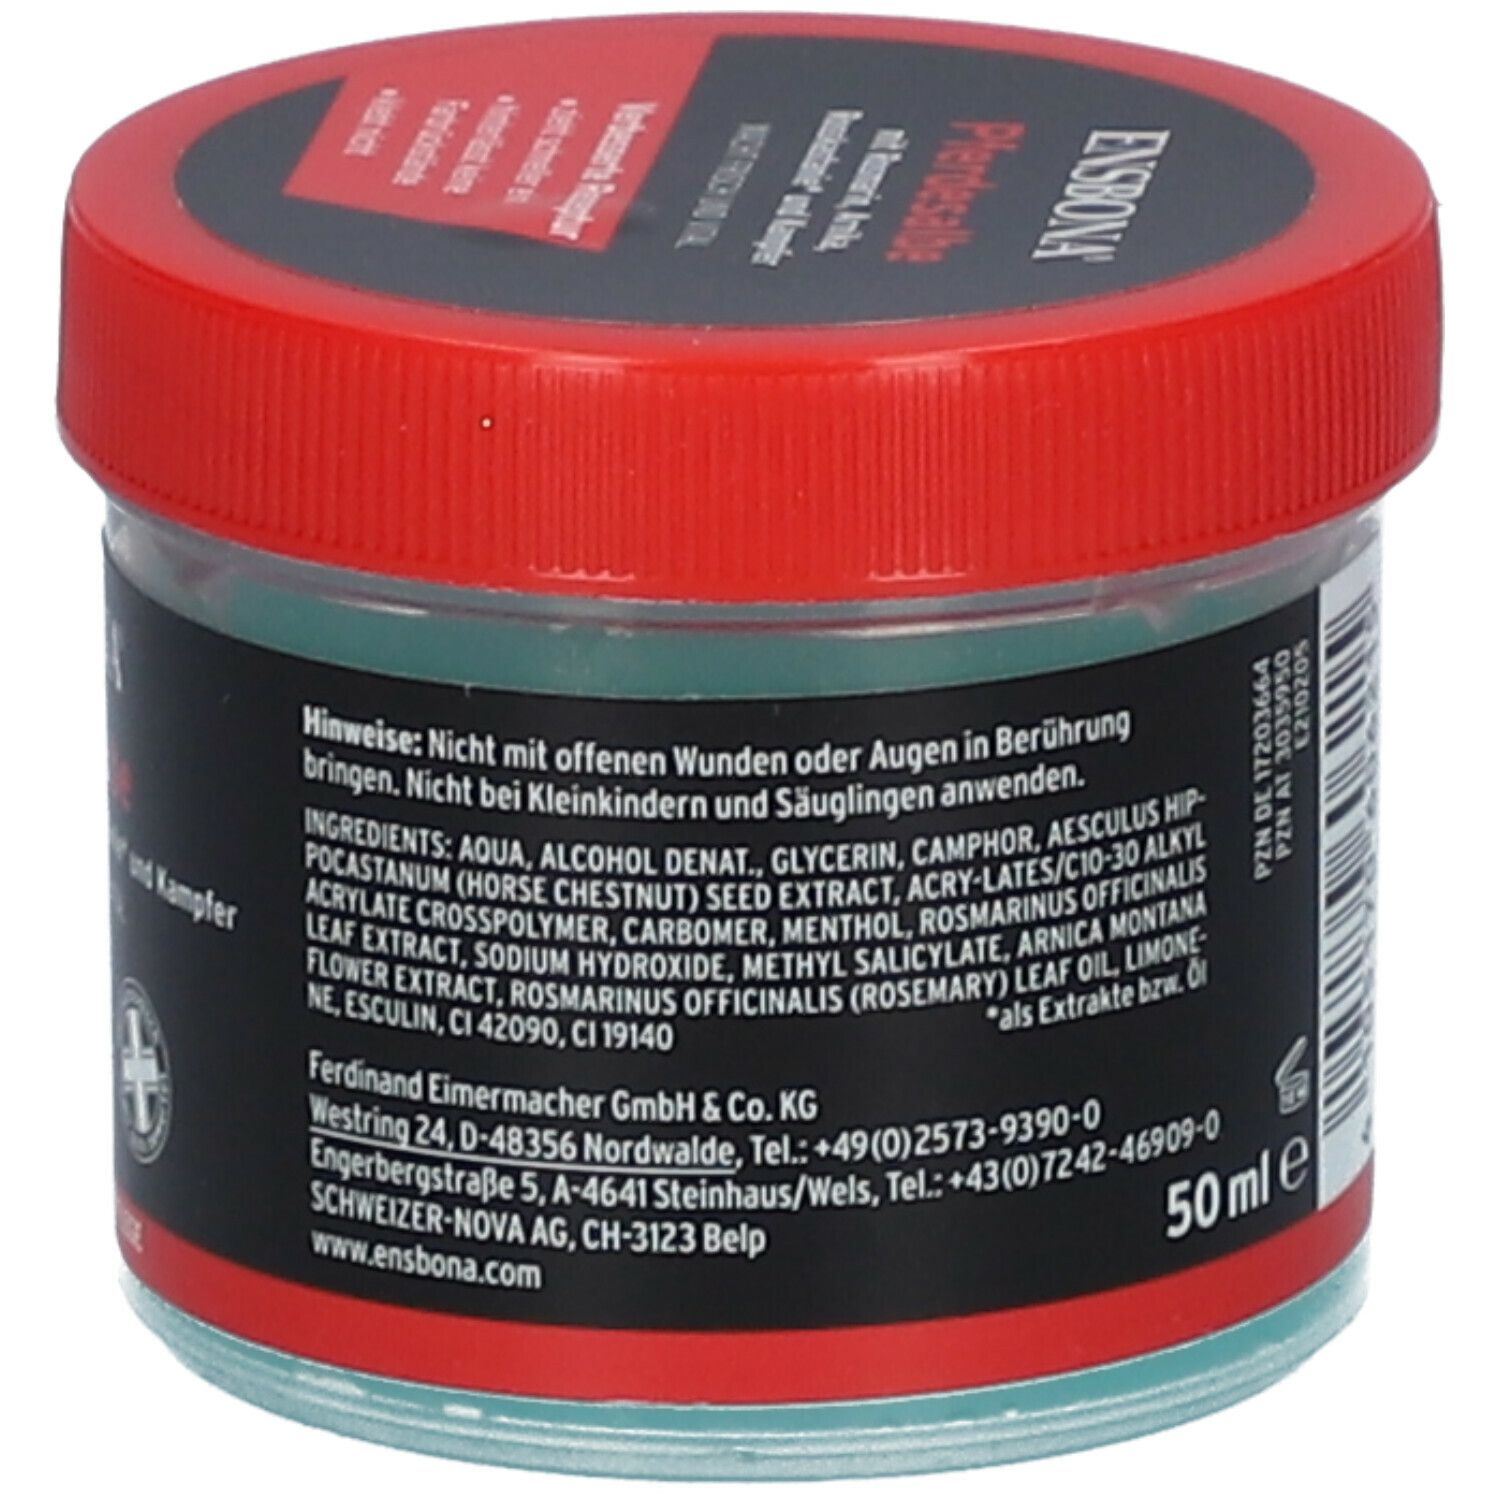 Morfose: Ultra Aqua Hair Gel Wax 5.92oz